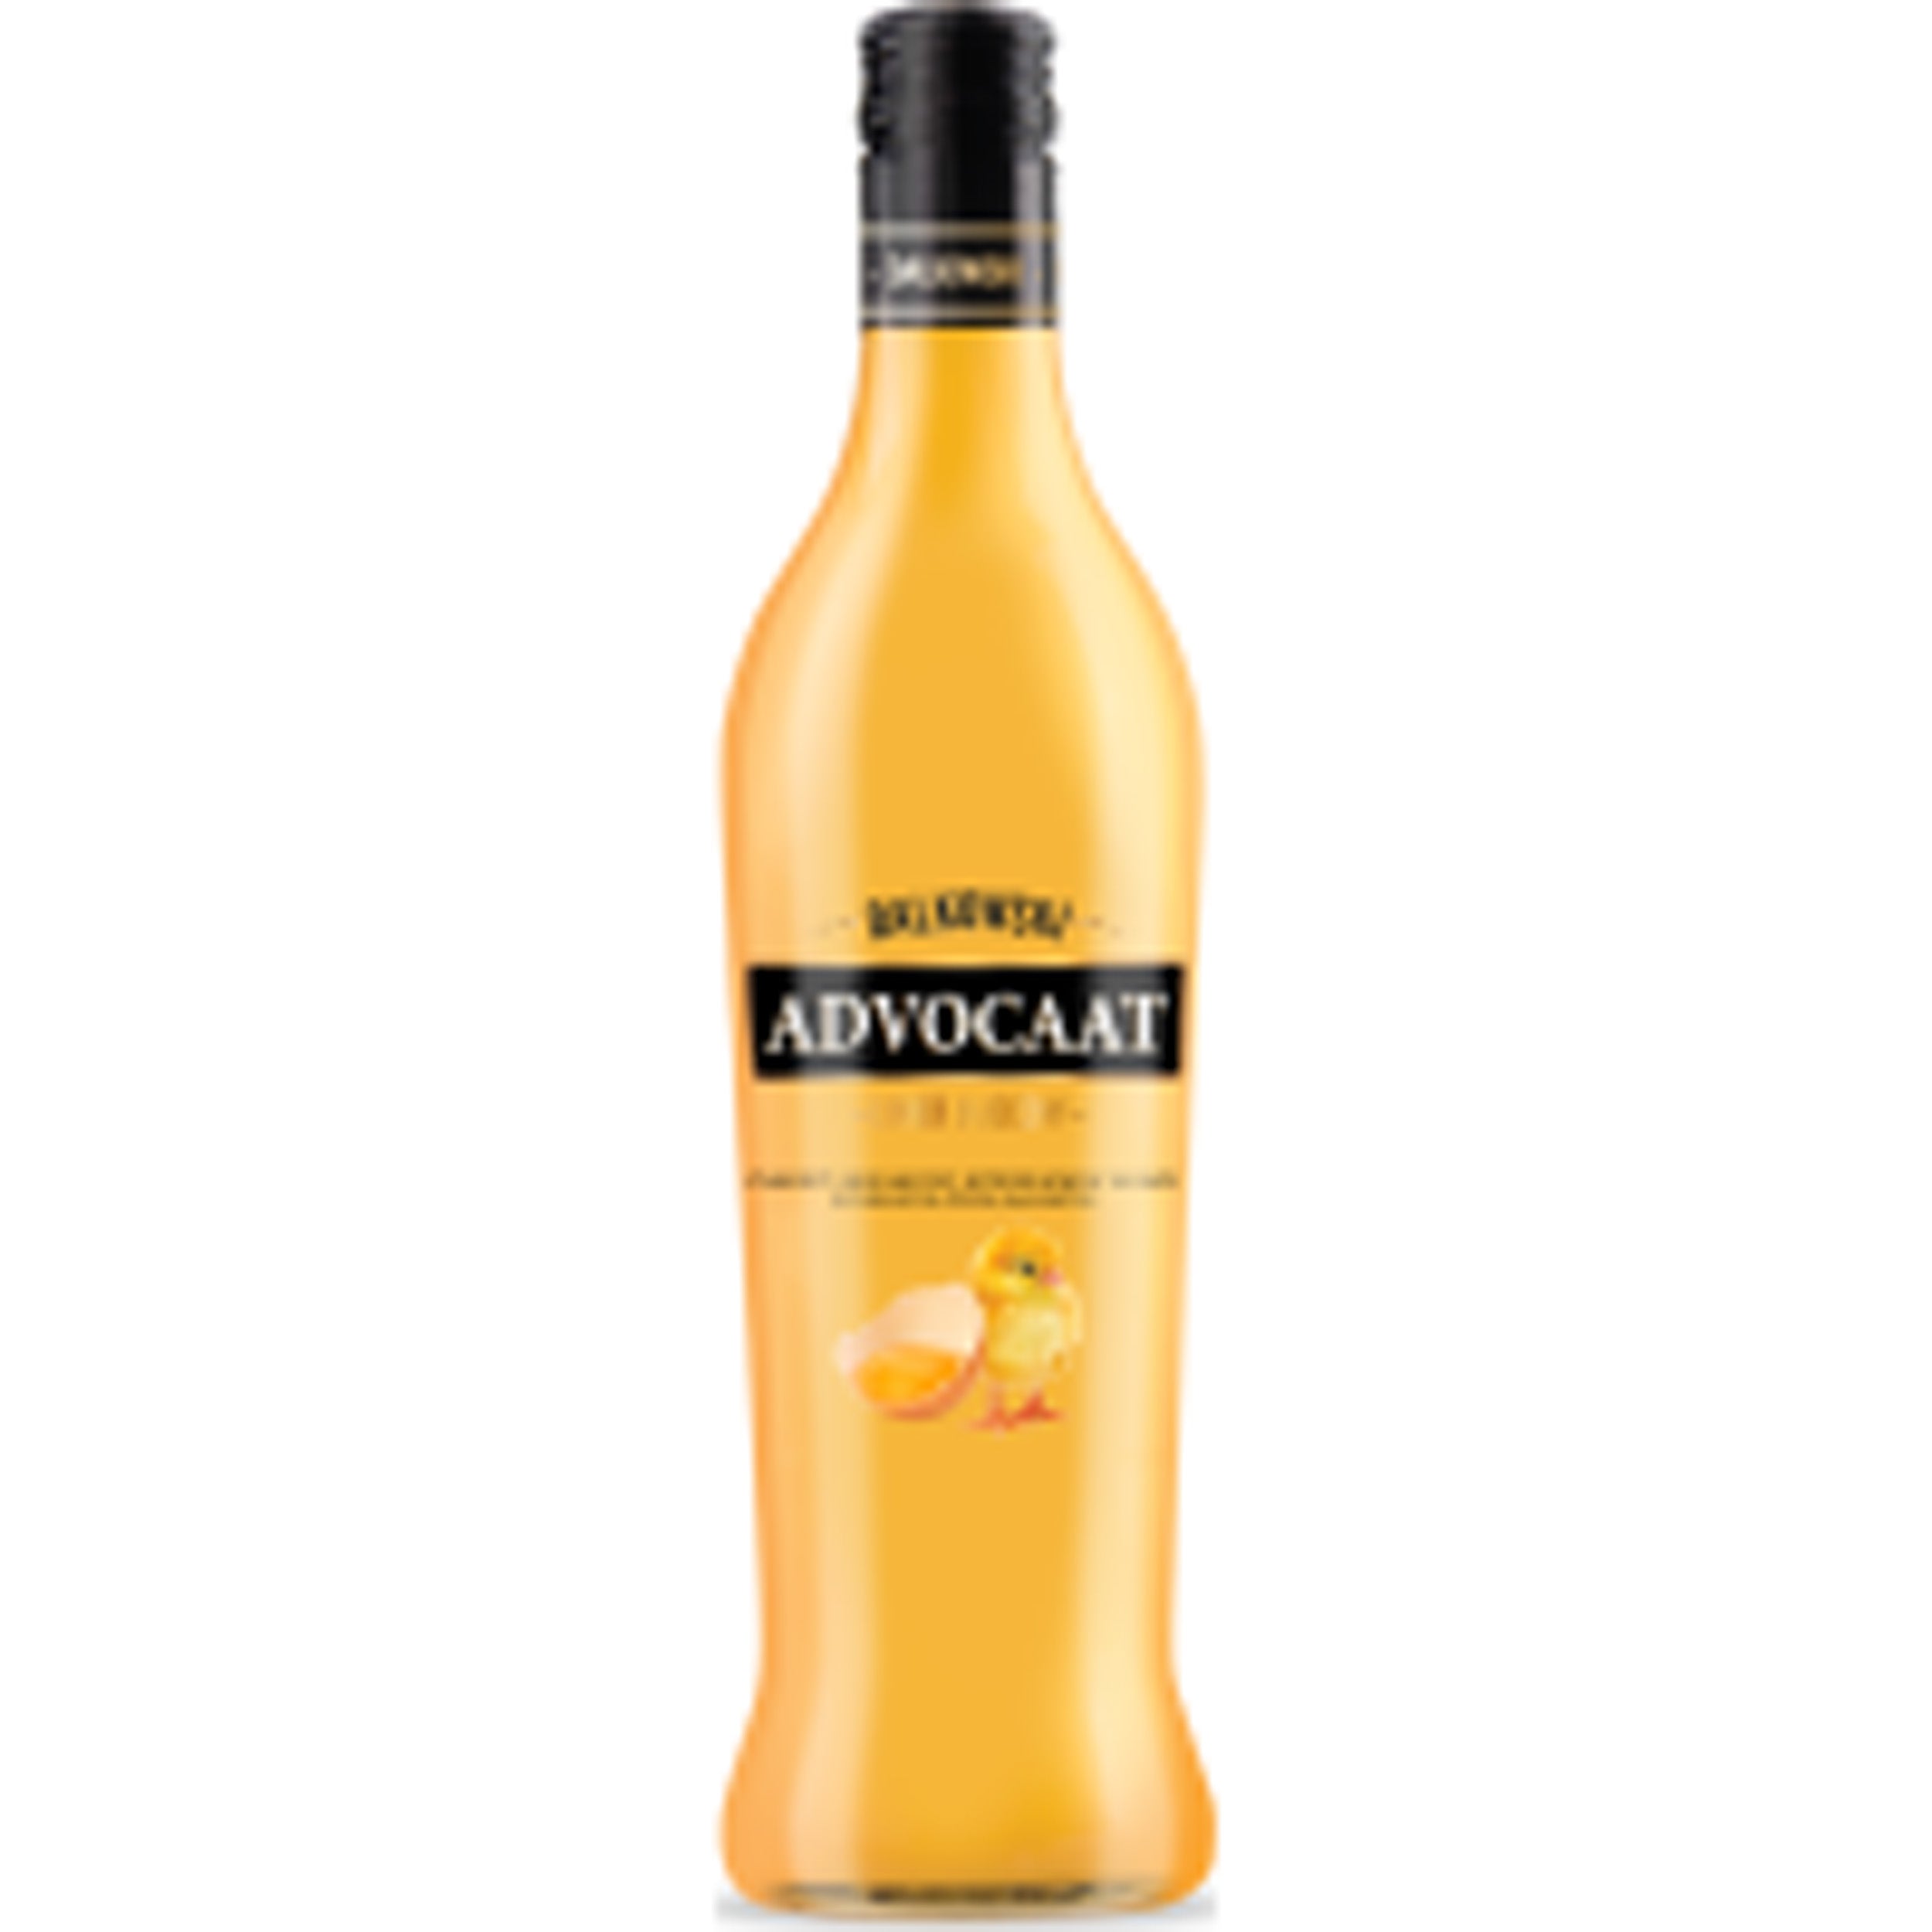 What is Advocaat Liqueur?